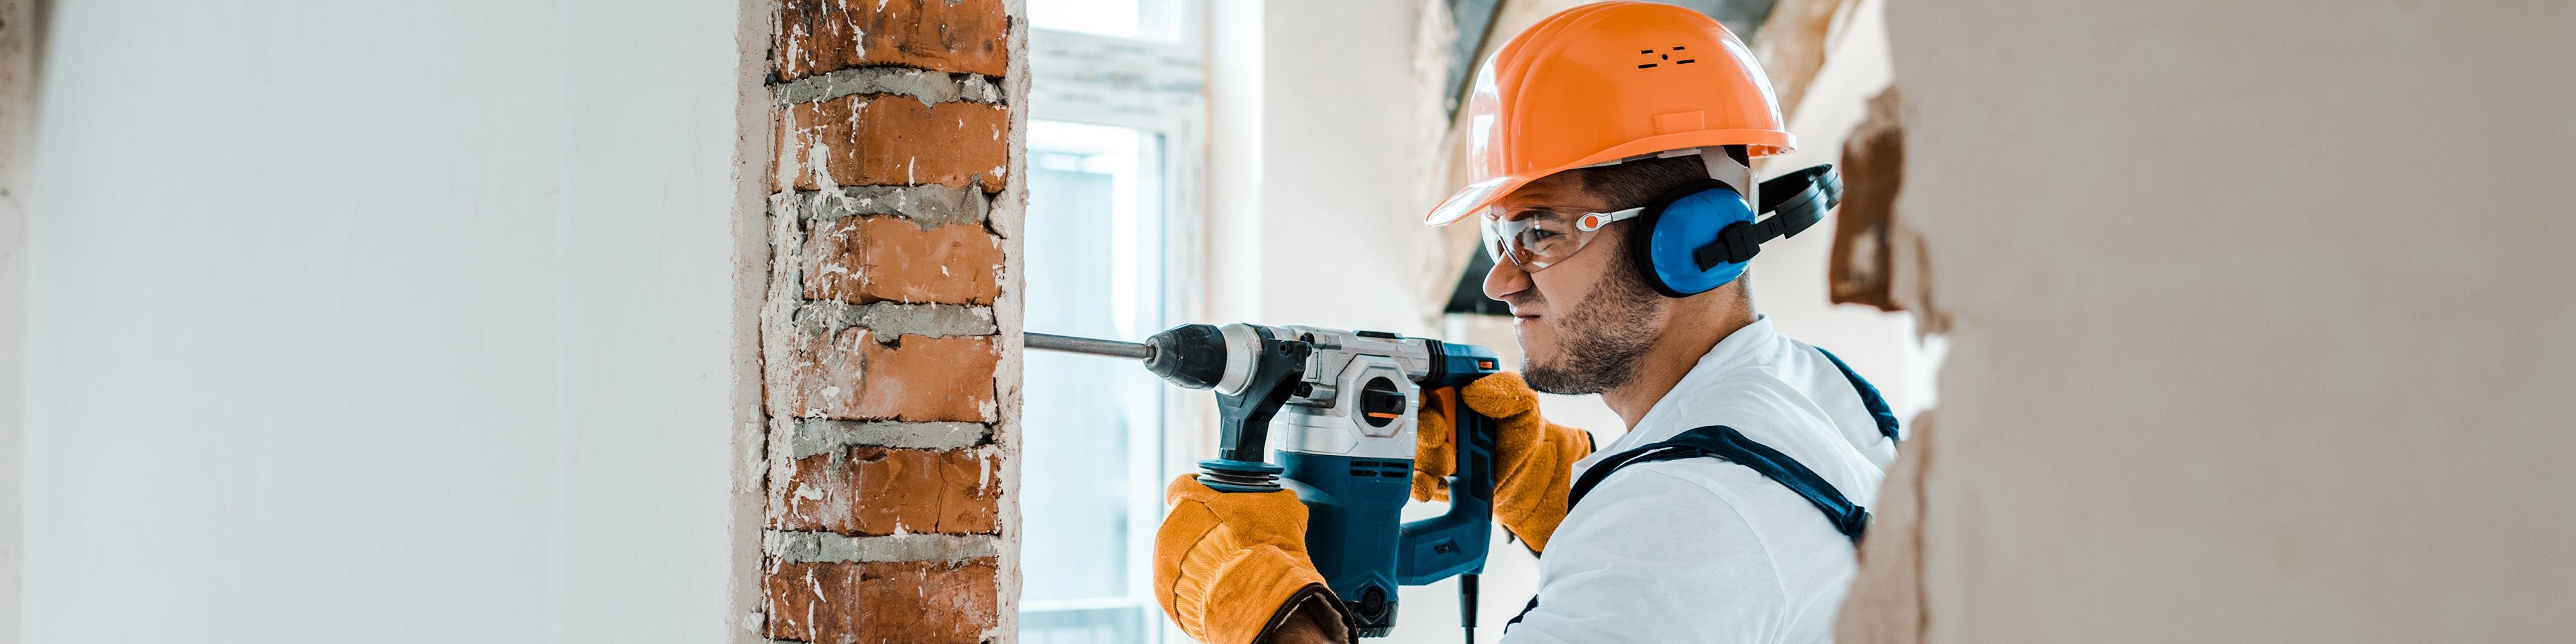 Handyman vs. contractor business licensing